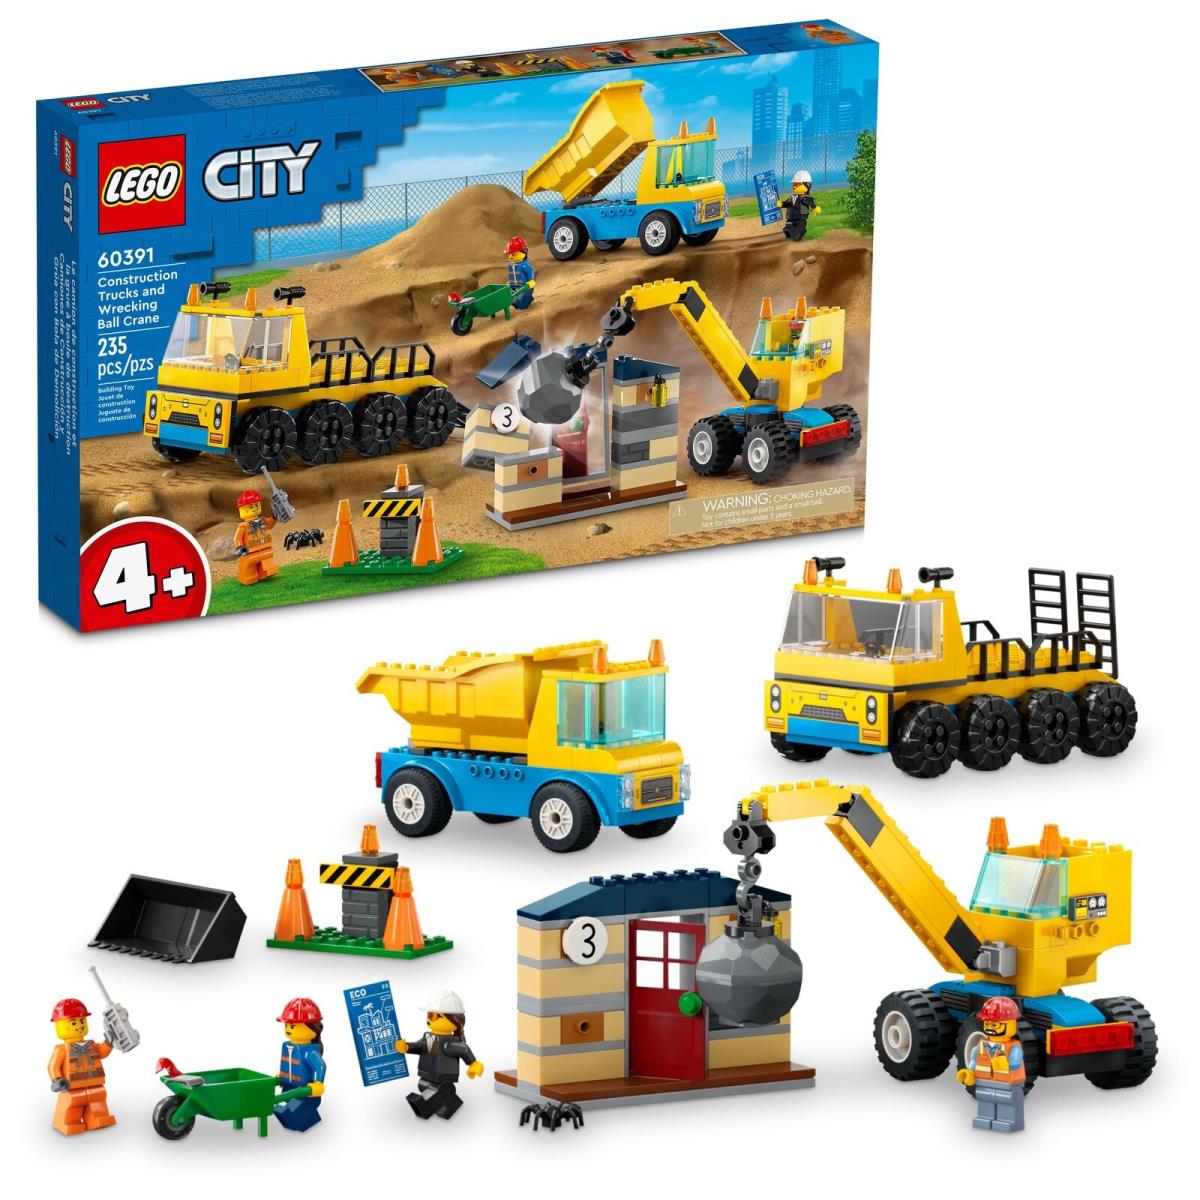 Lego City: Construction Trucks and Wrecking Ball Crane 60391